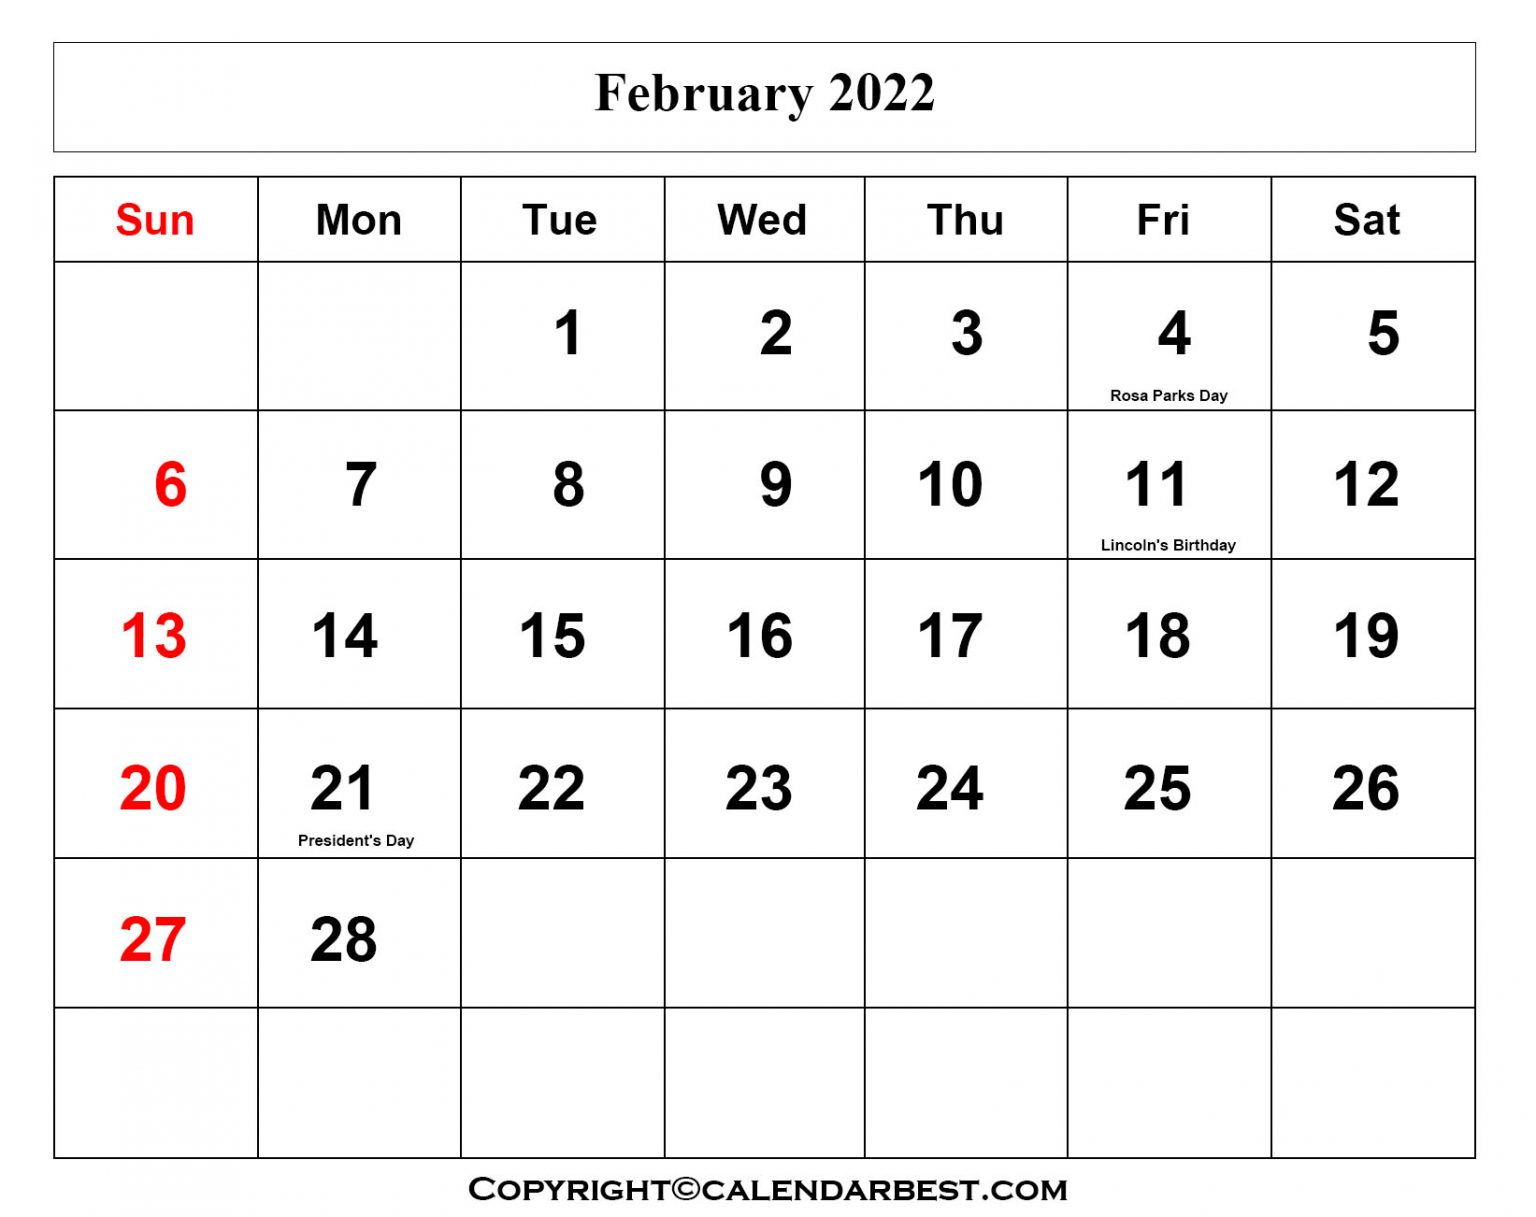 Free Printable February Calendar 2022 with Holidays